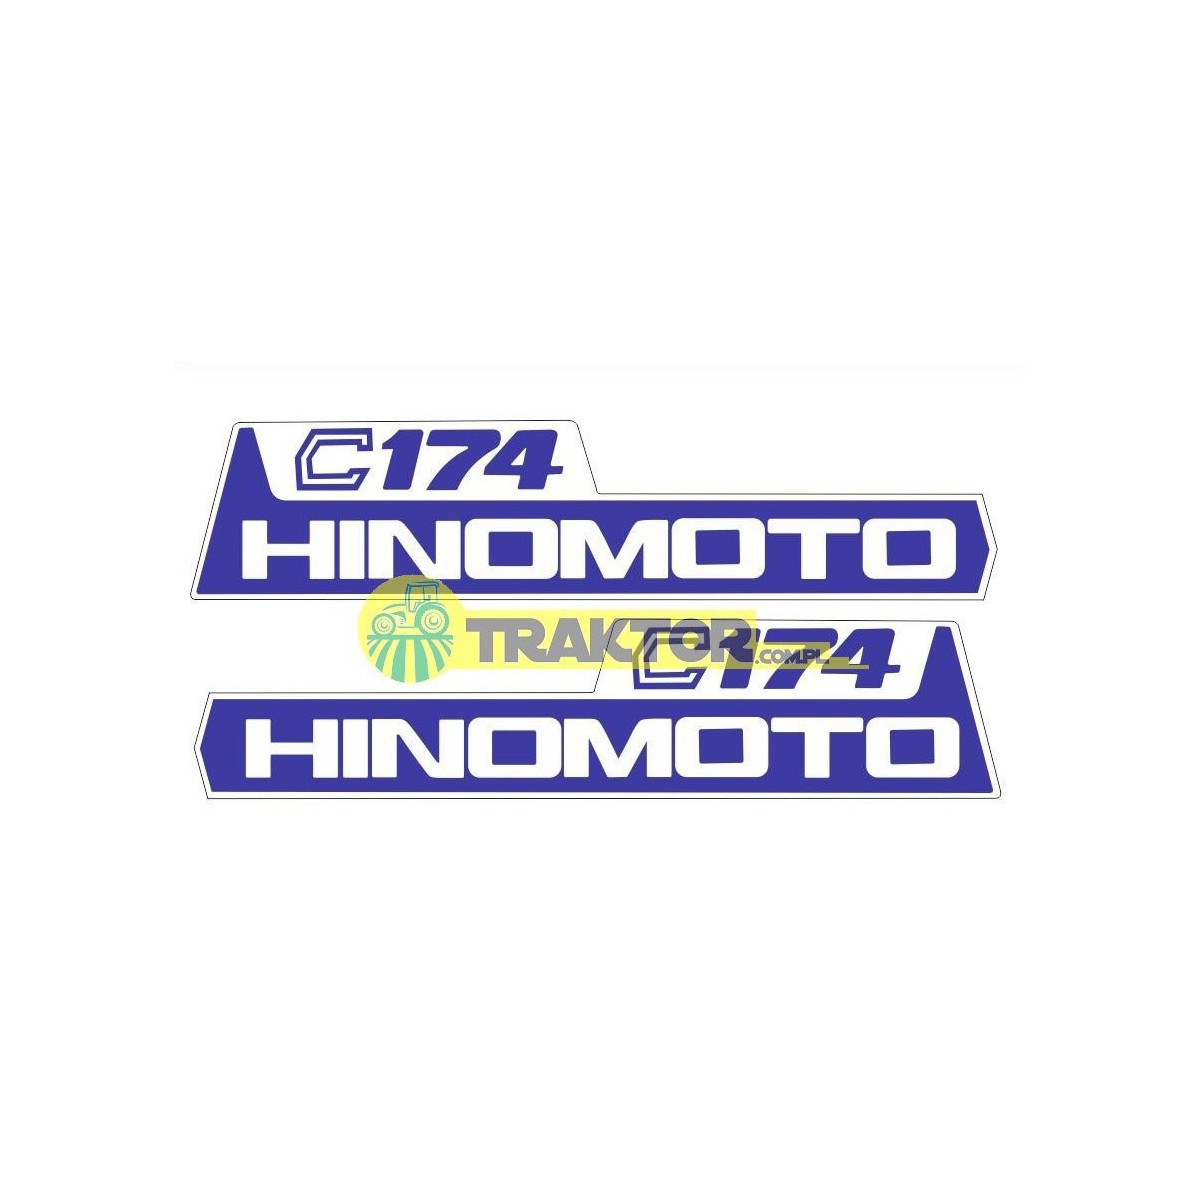 HINOMOTO C174 stickers